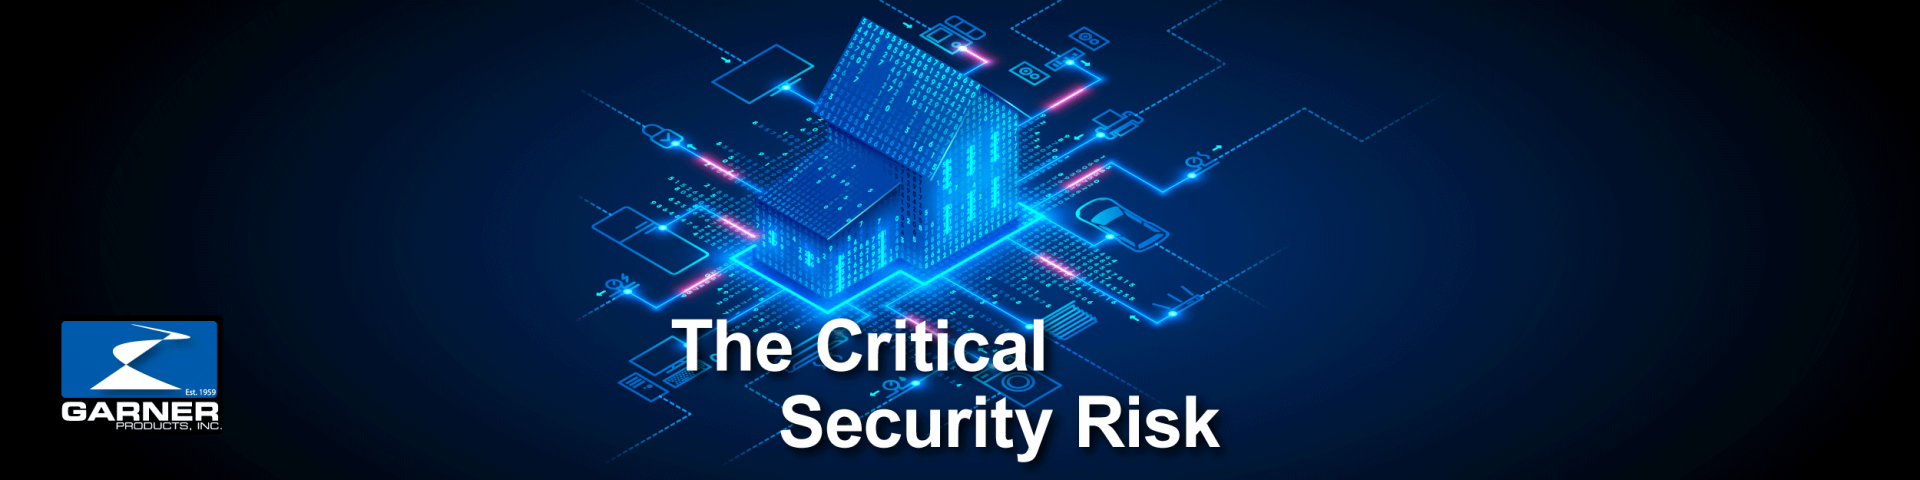 critical-security-risk-2-1920x480